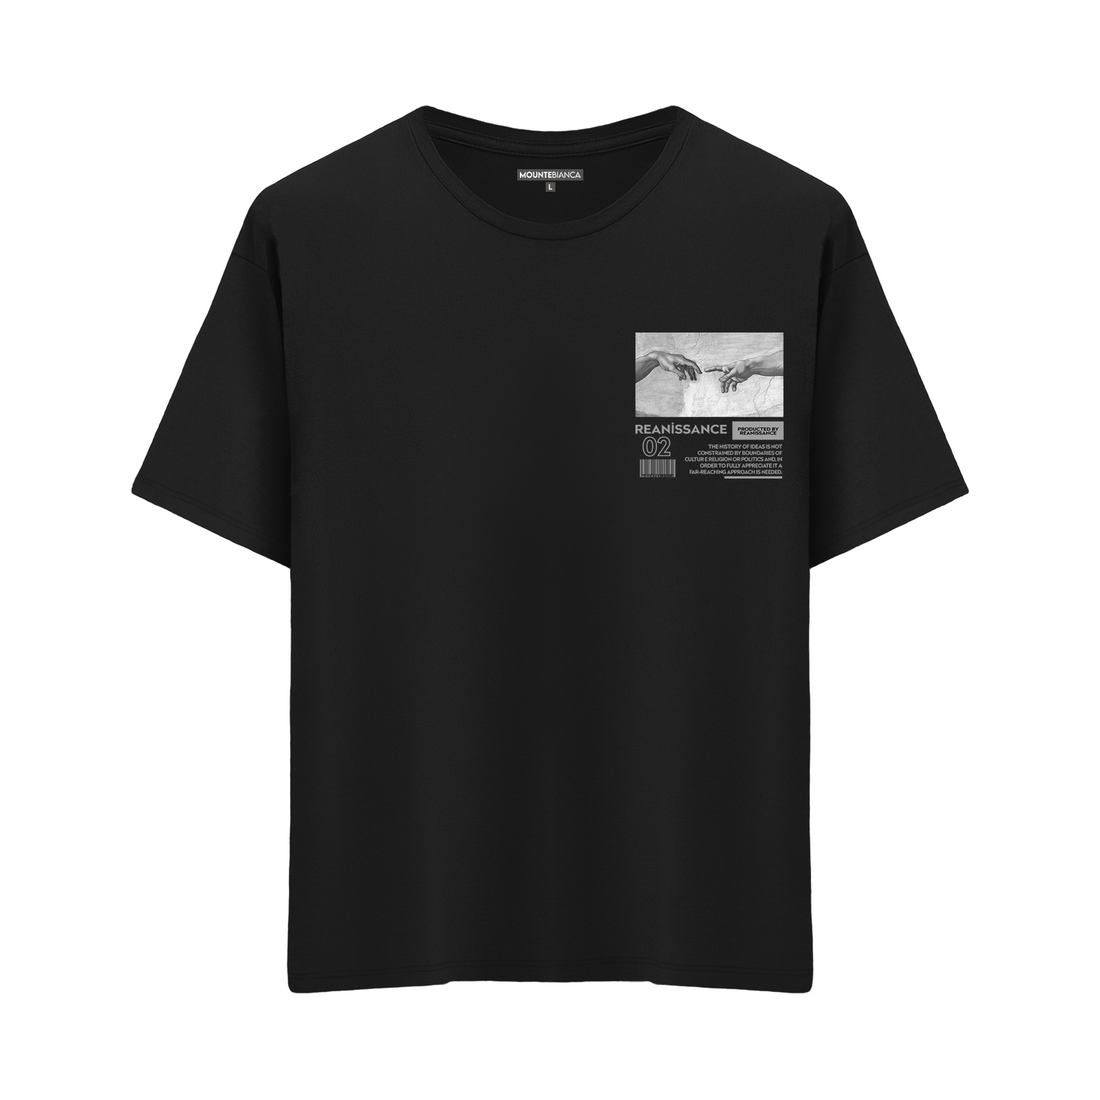 Reanissance - Oversize T-shirt